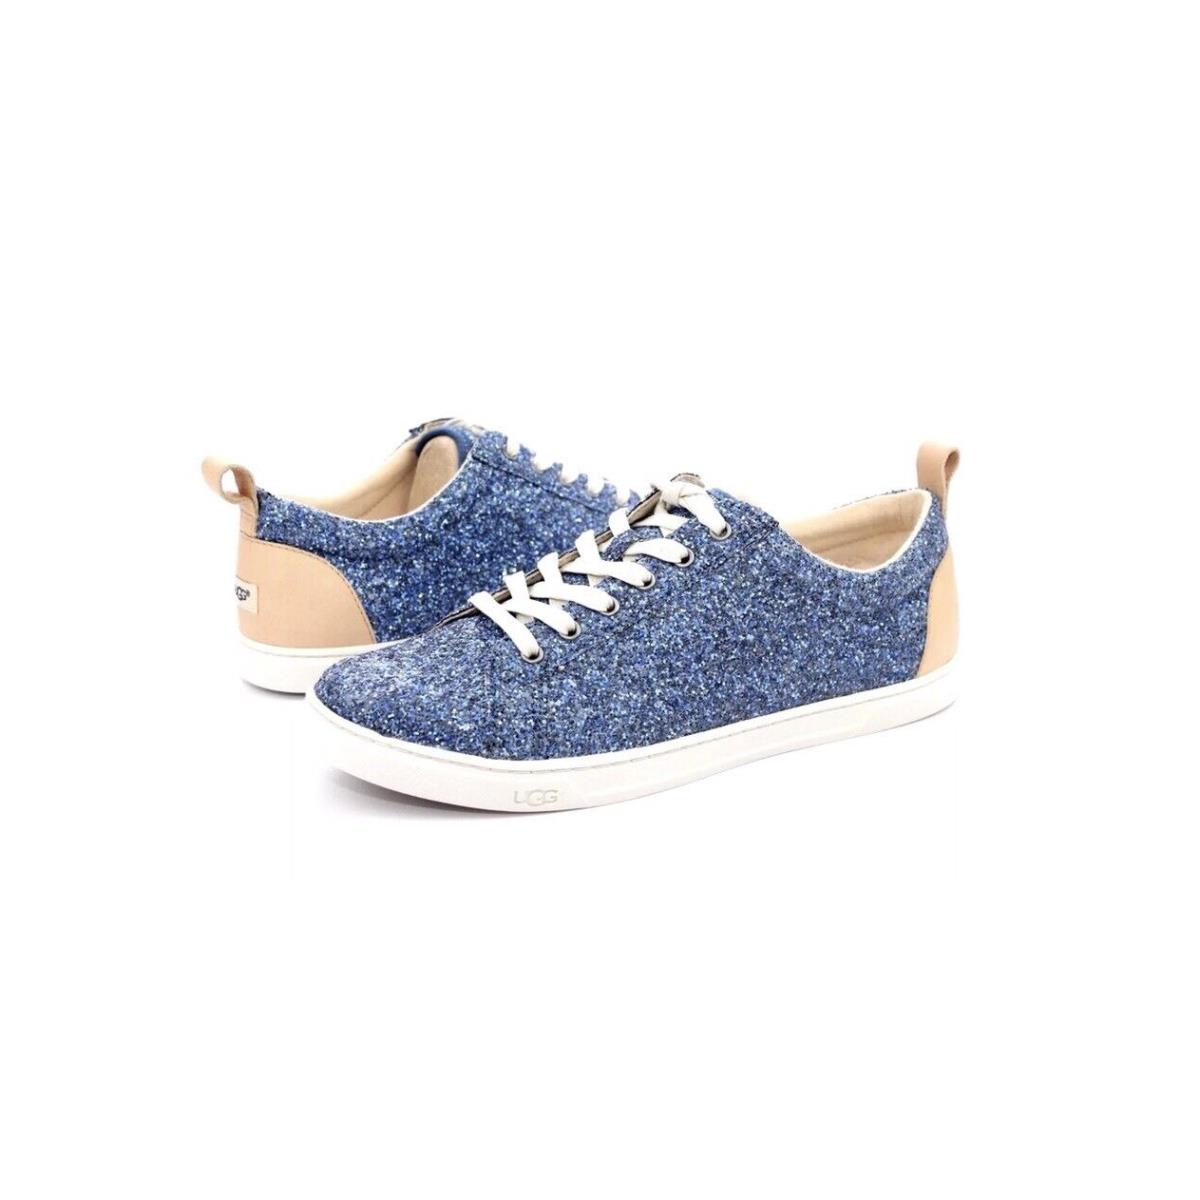 Ugg Karine Chunky Glitter Blue Multi Tennis Shoes US Size 5.5 Womens - Blue Multi